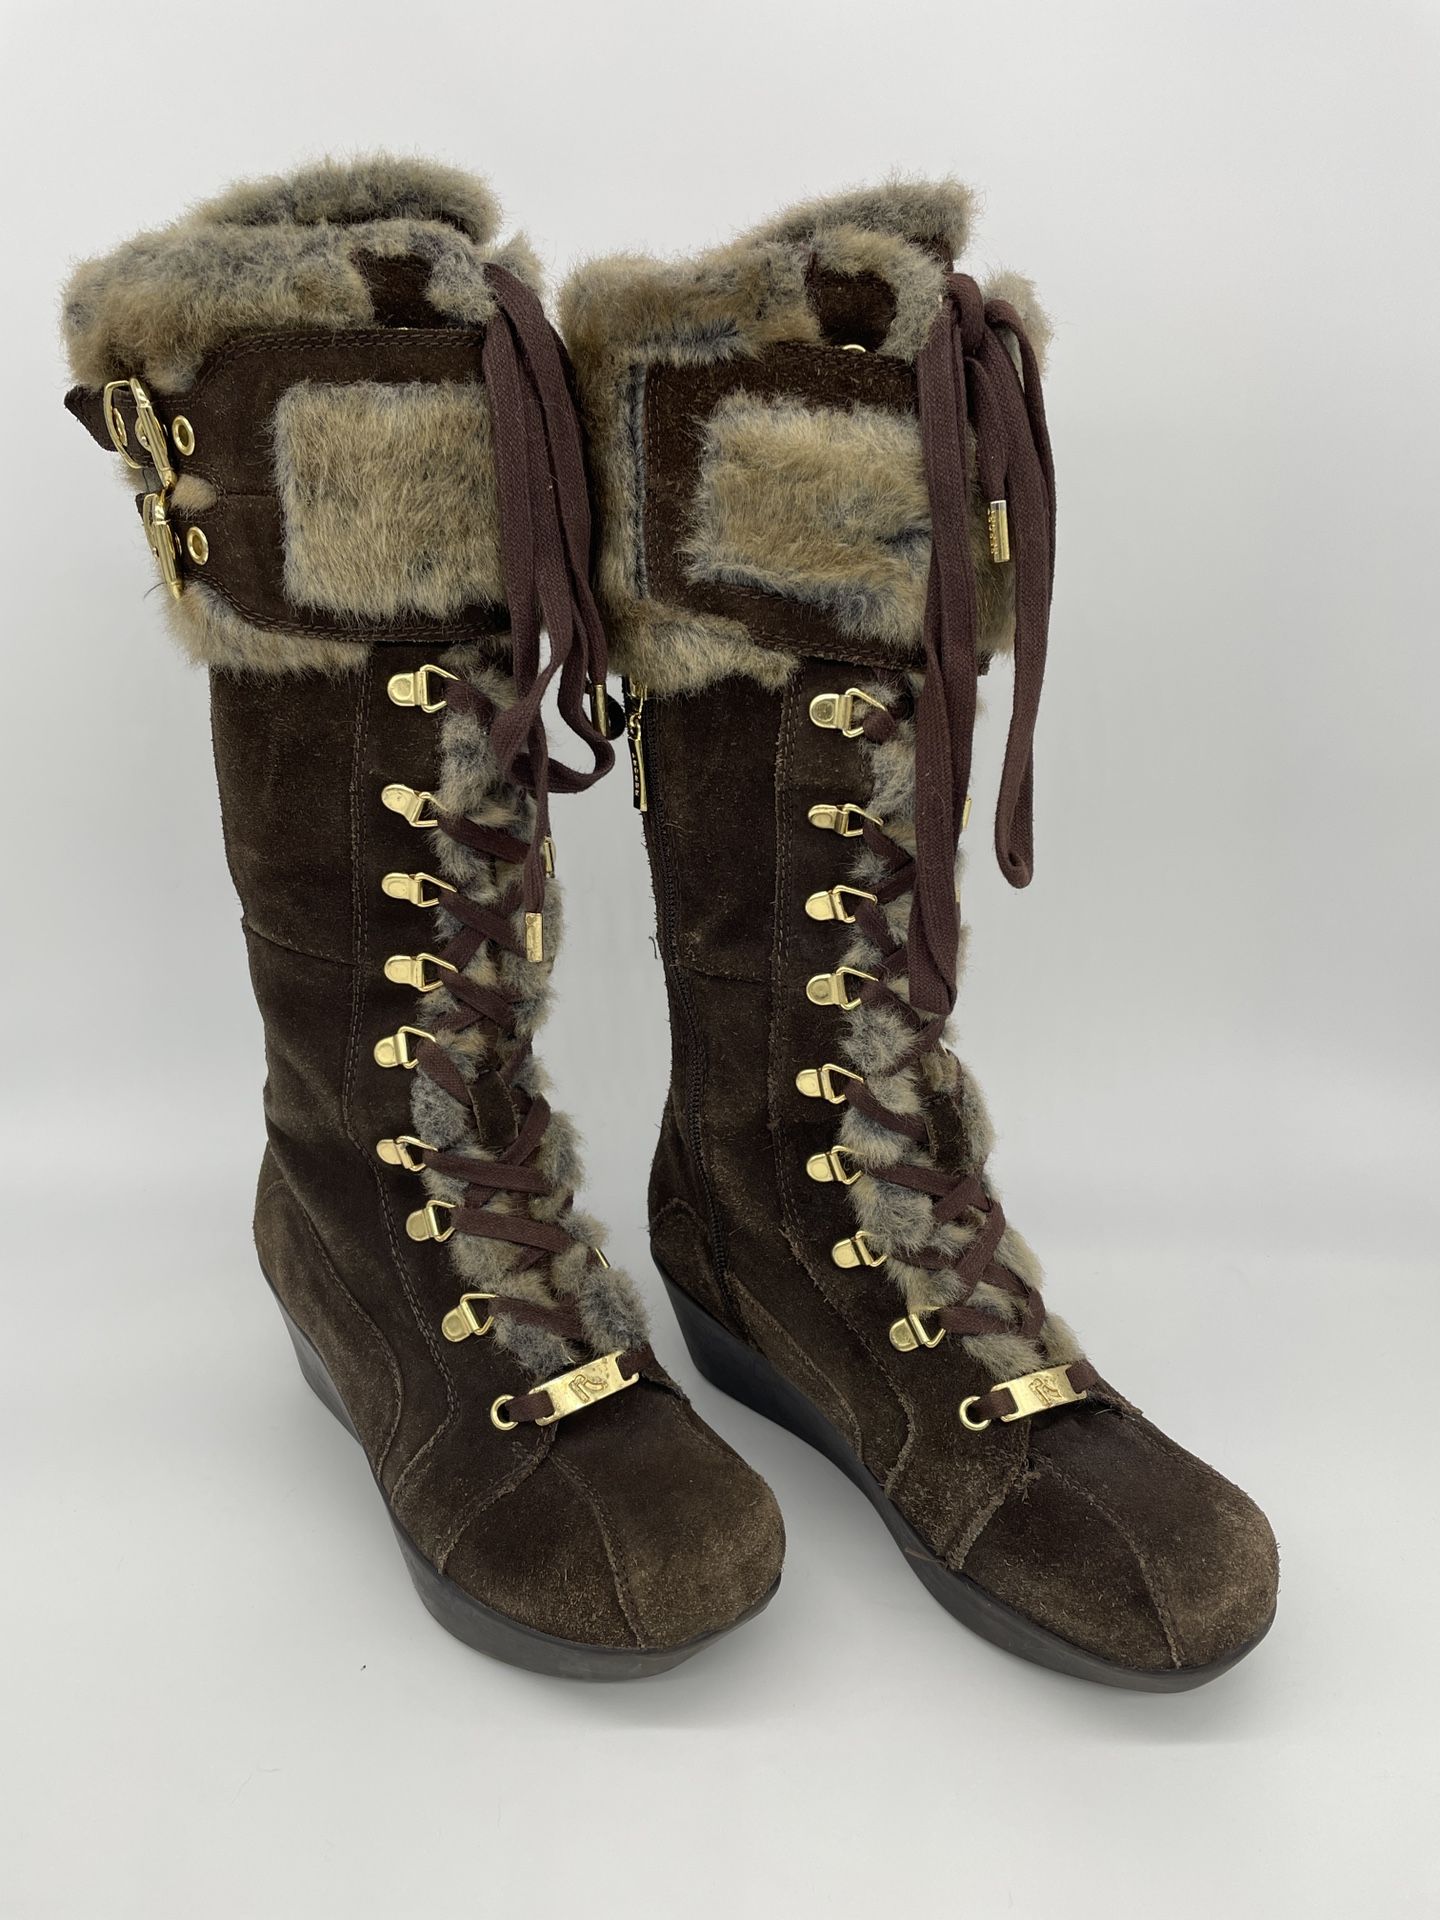 Report Icon Cascade Brown Suede Leather Faux Fur Boots Zipper Lace Up Sz 7.5